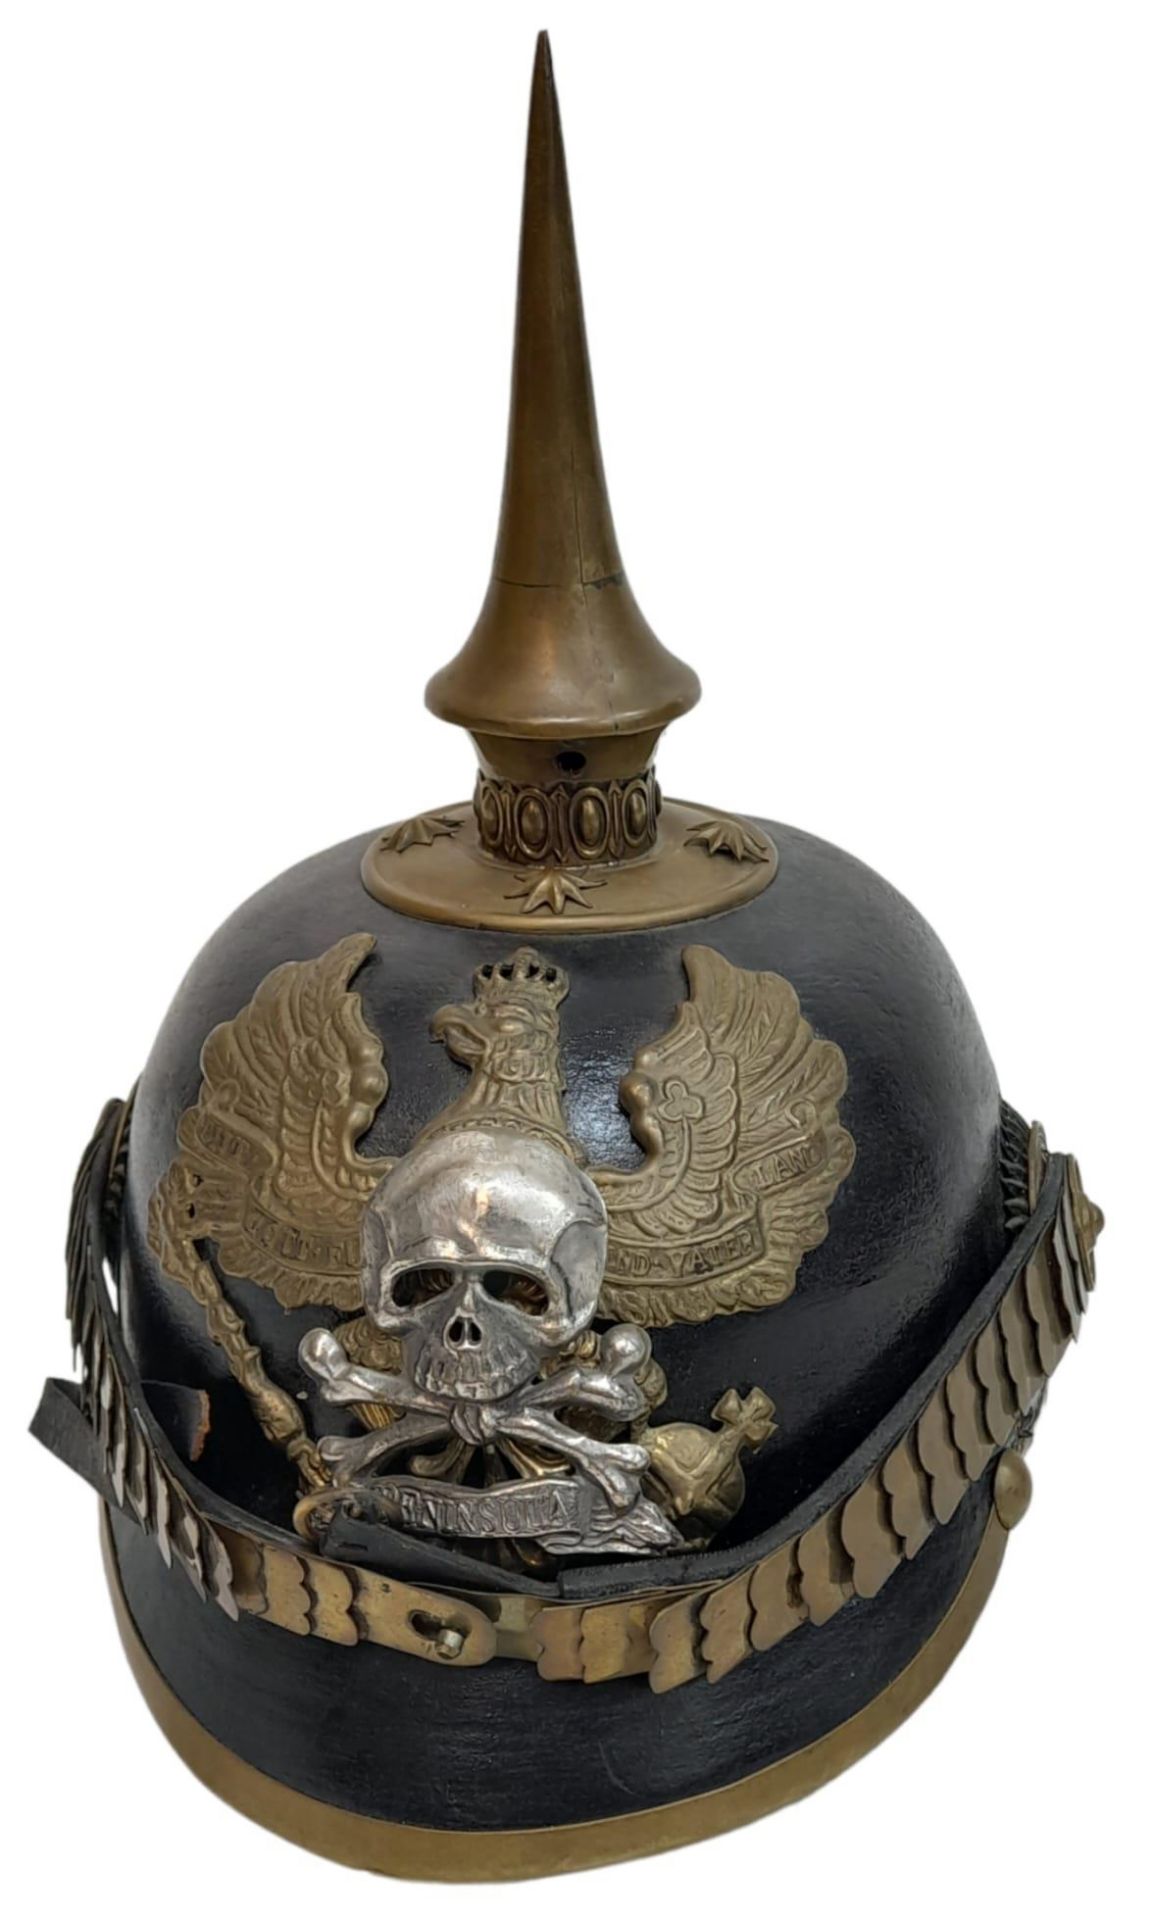 WW1 Imperial German “Brunswick” Pickelhaube. This helmet has been restored using many original parts